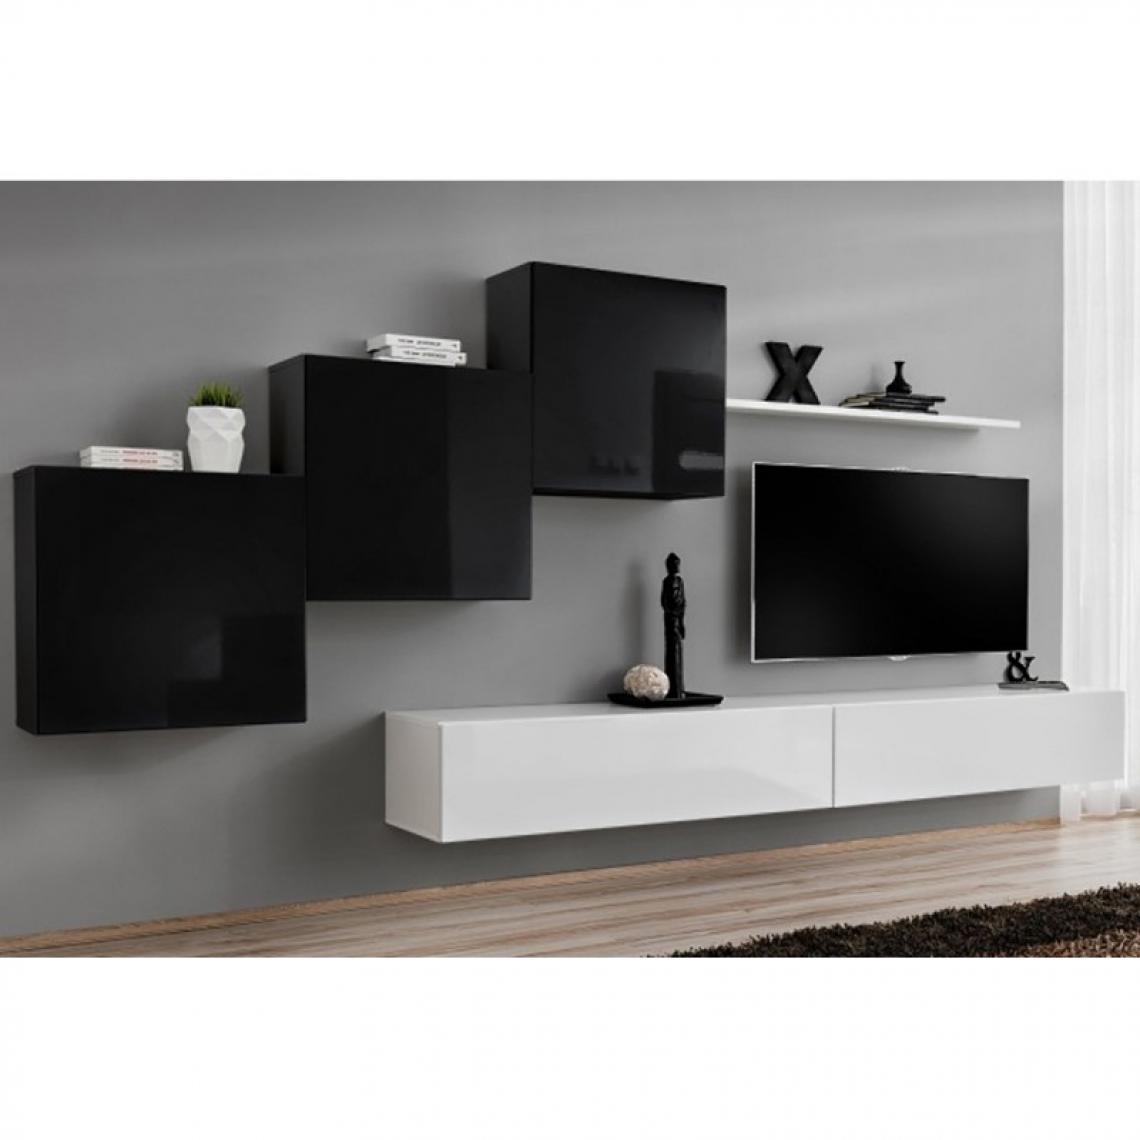 Ac-Deco - Meuble TV Mural Design Switch X 330cm Noir & Blanc - Meubles TV, Hi-Fi